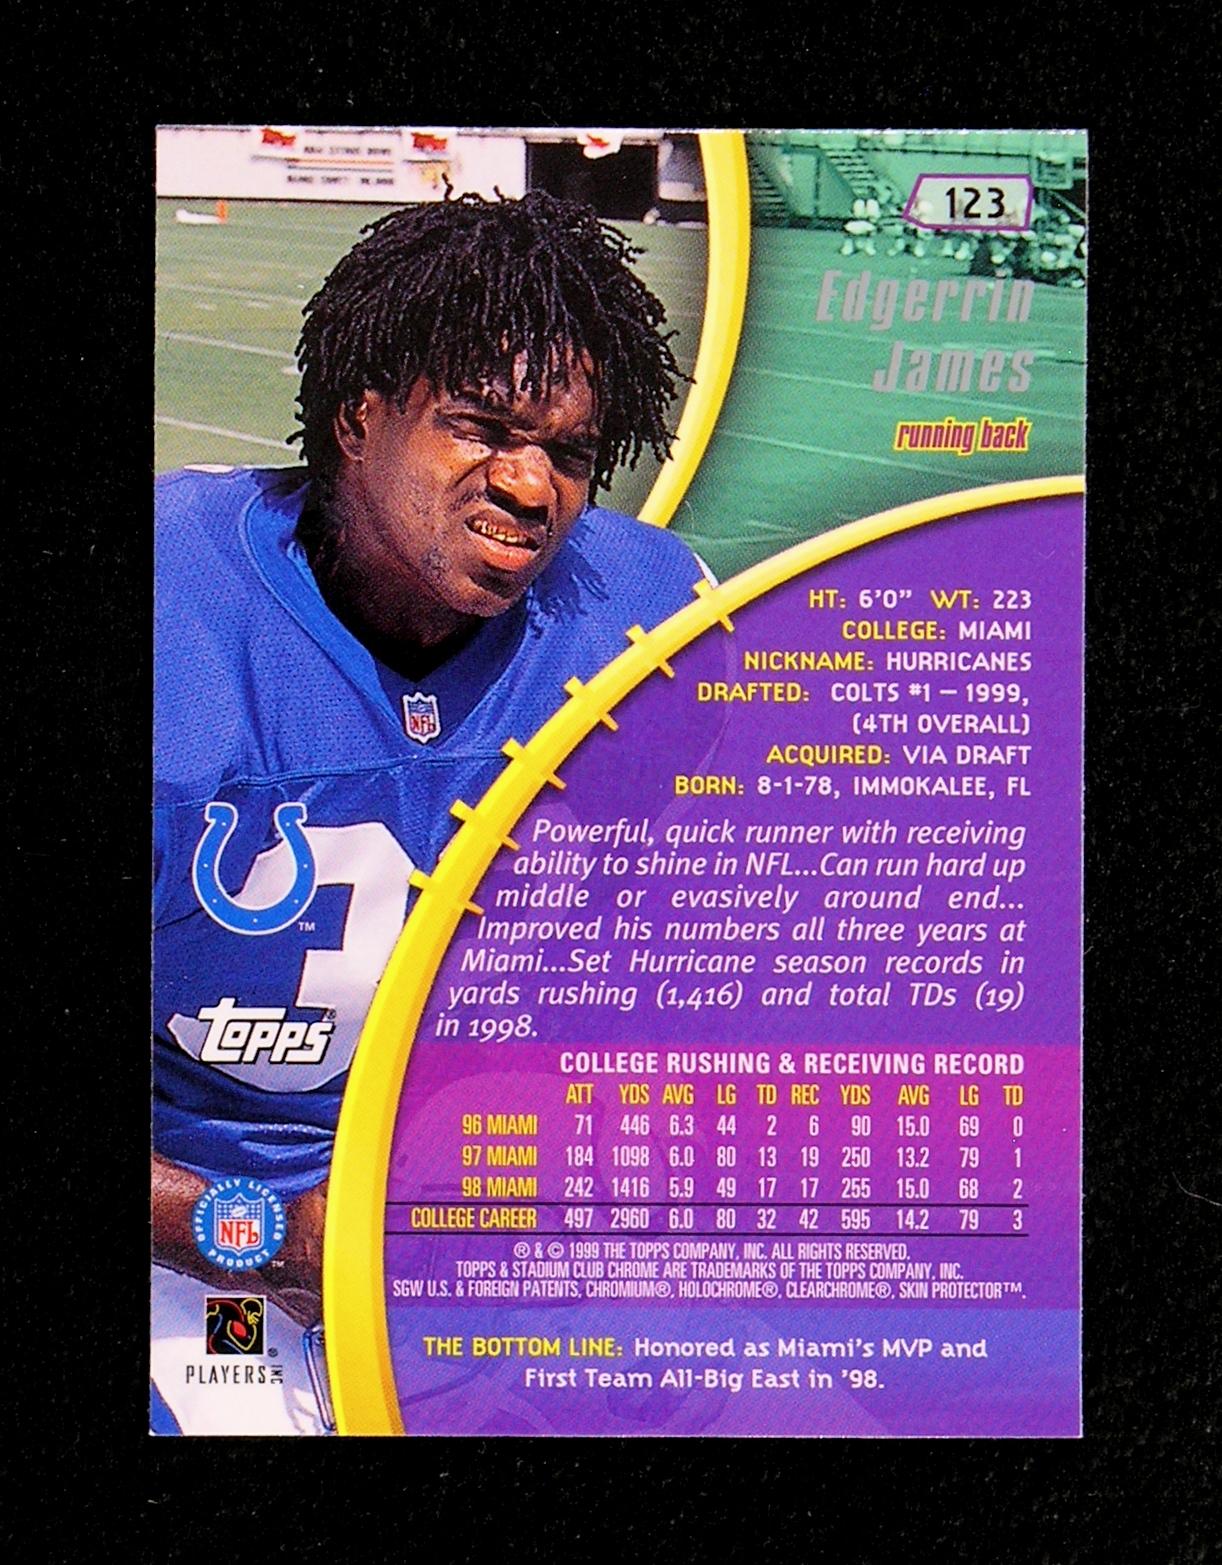 1999 Topps Stadium Chrome ROOKIE Football Card #123 Rookie Edgrrin James In